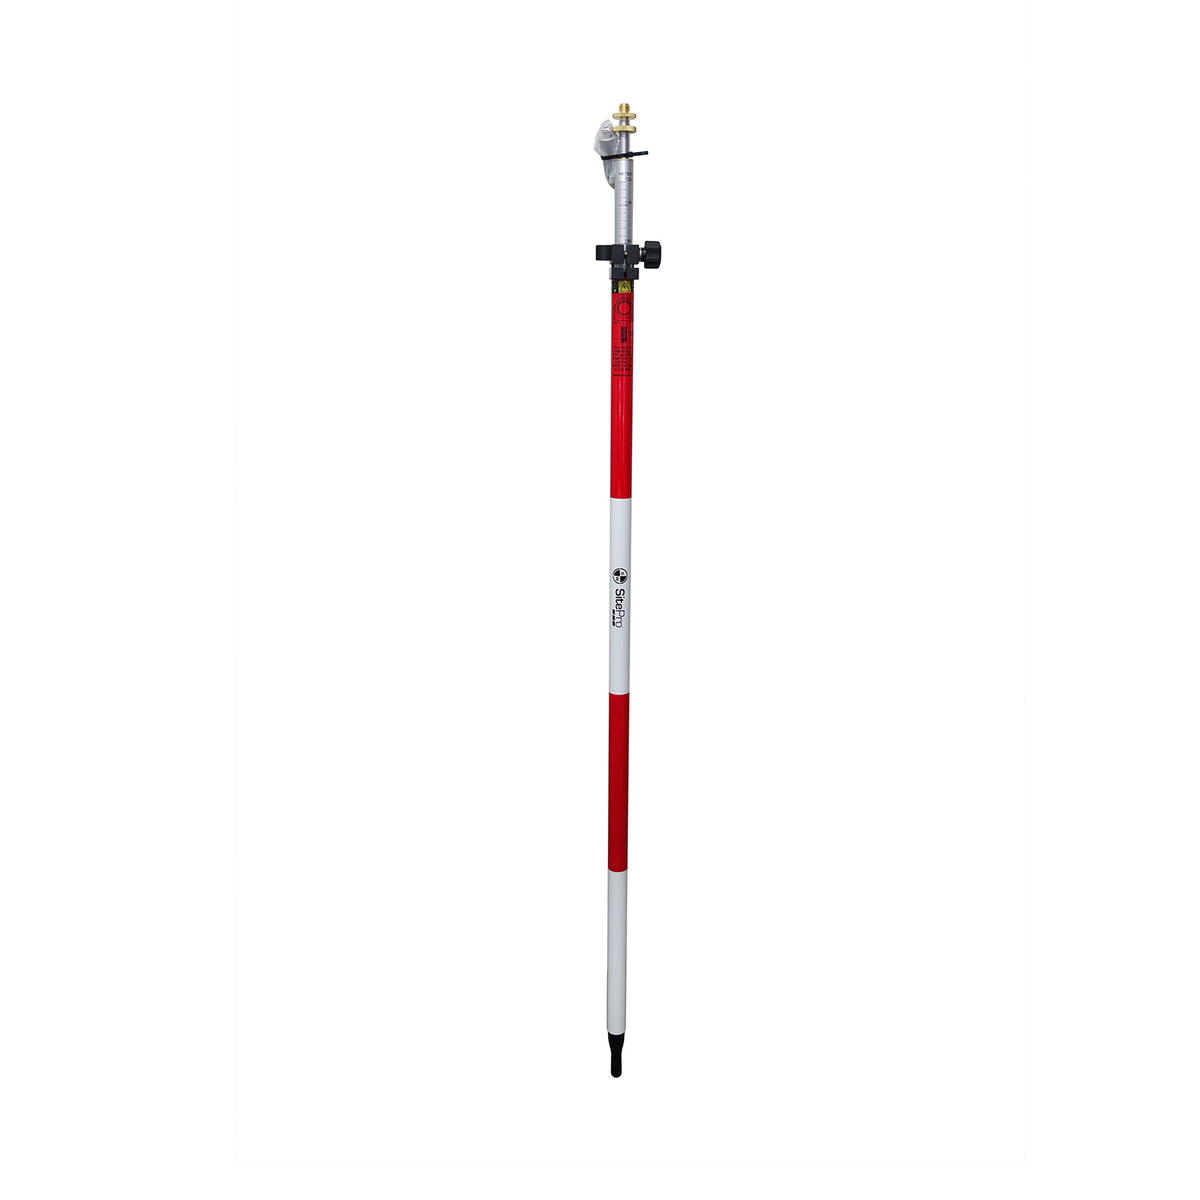 SitePro 8 ft Twist Lock Prism Pole (10ths, Metric) -Rods, Poles & Accessories- eGPS Solutions Inc.